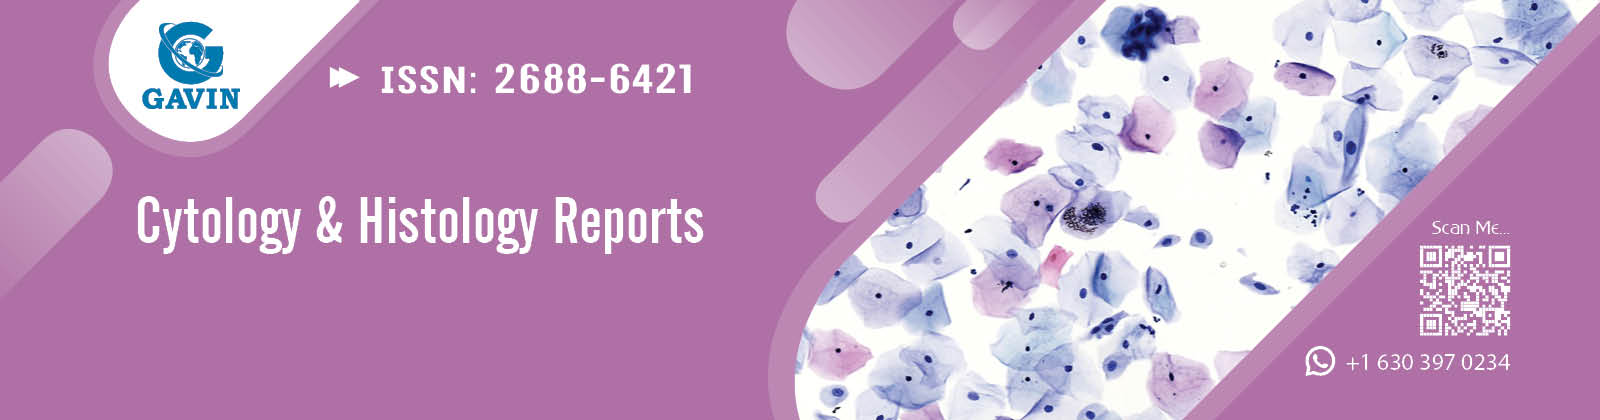 Cytology & Histology Reports